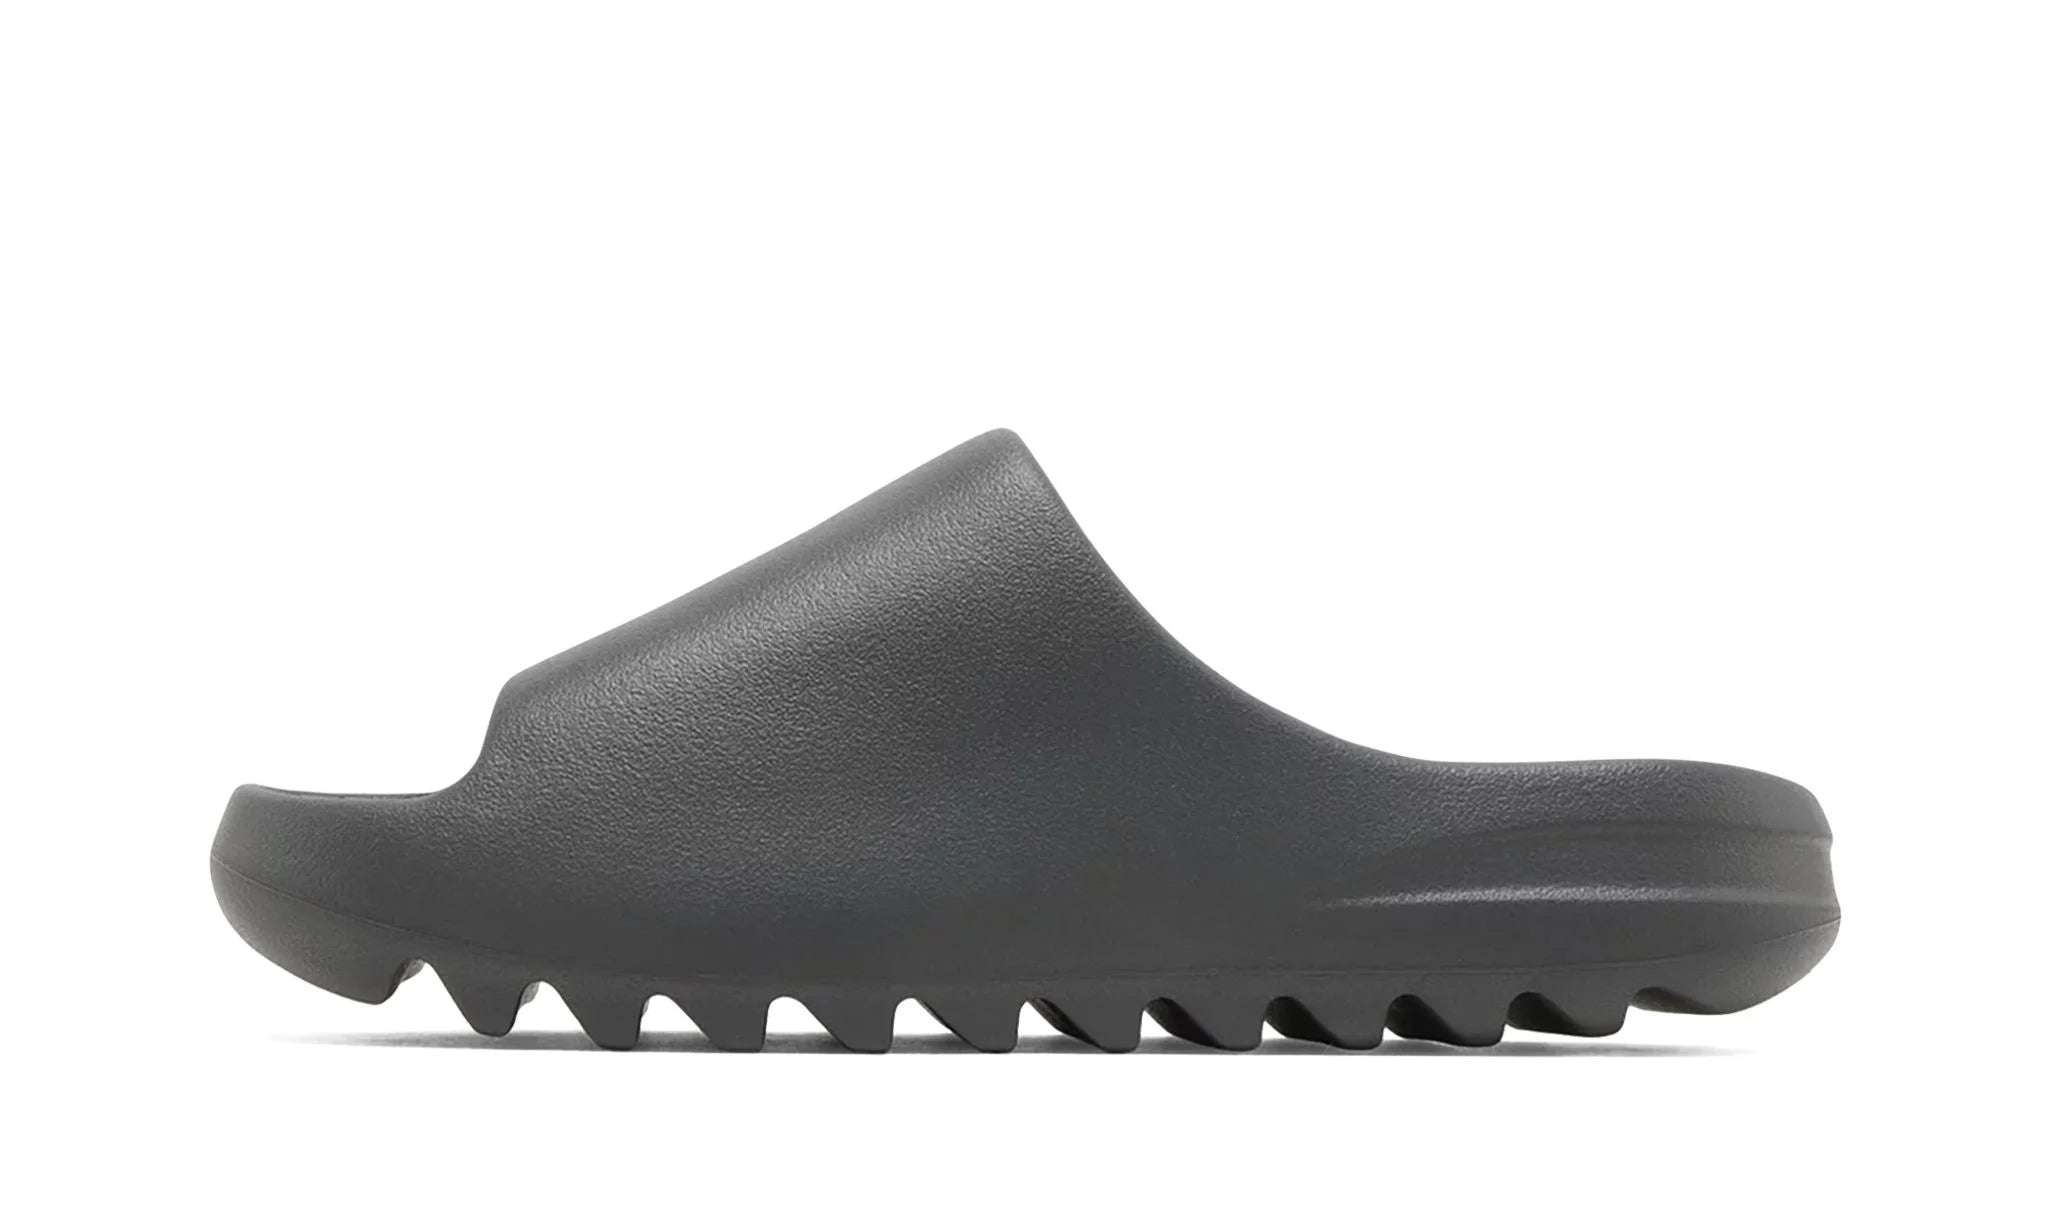 Adidas Yeezy Slide Granite - Yeezy Slide - Pirri